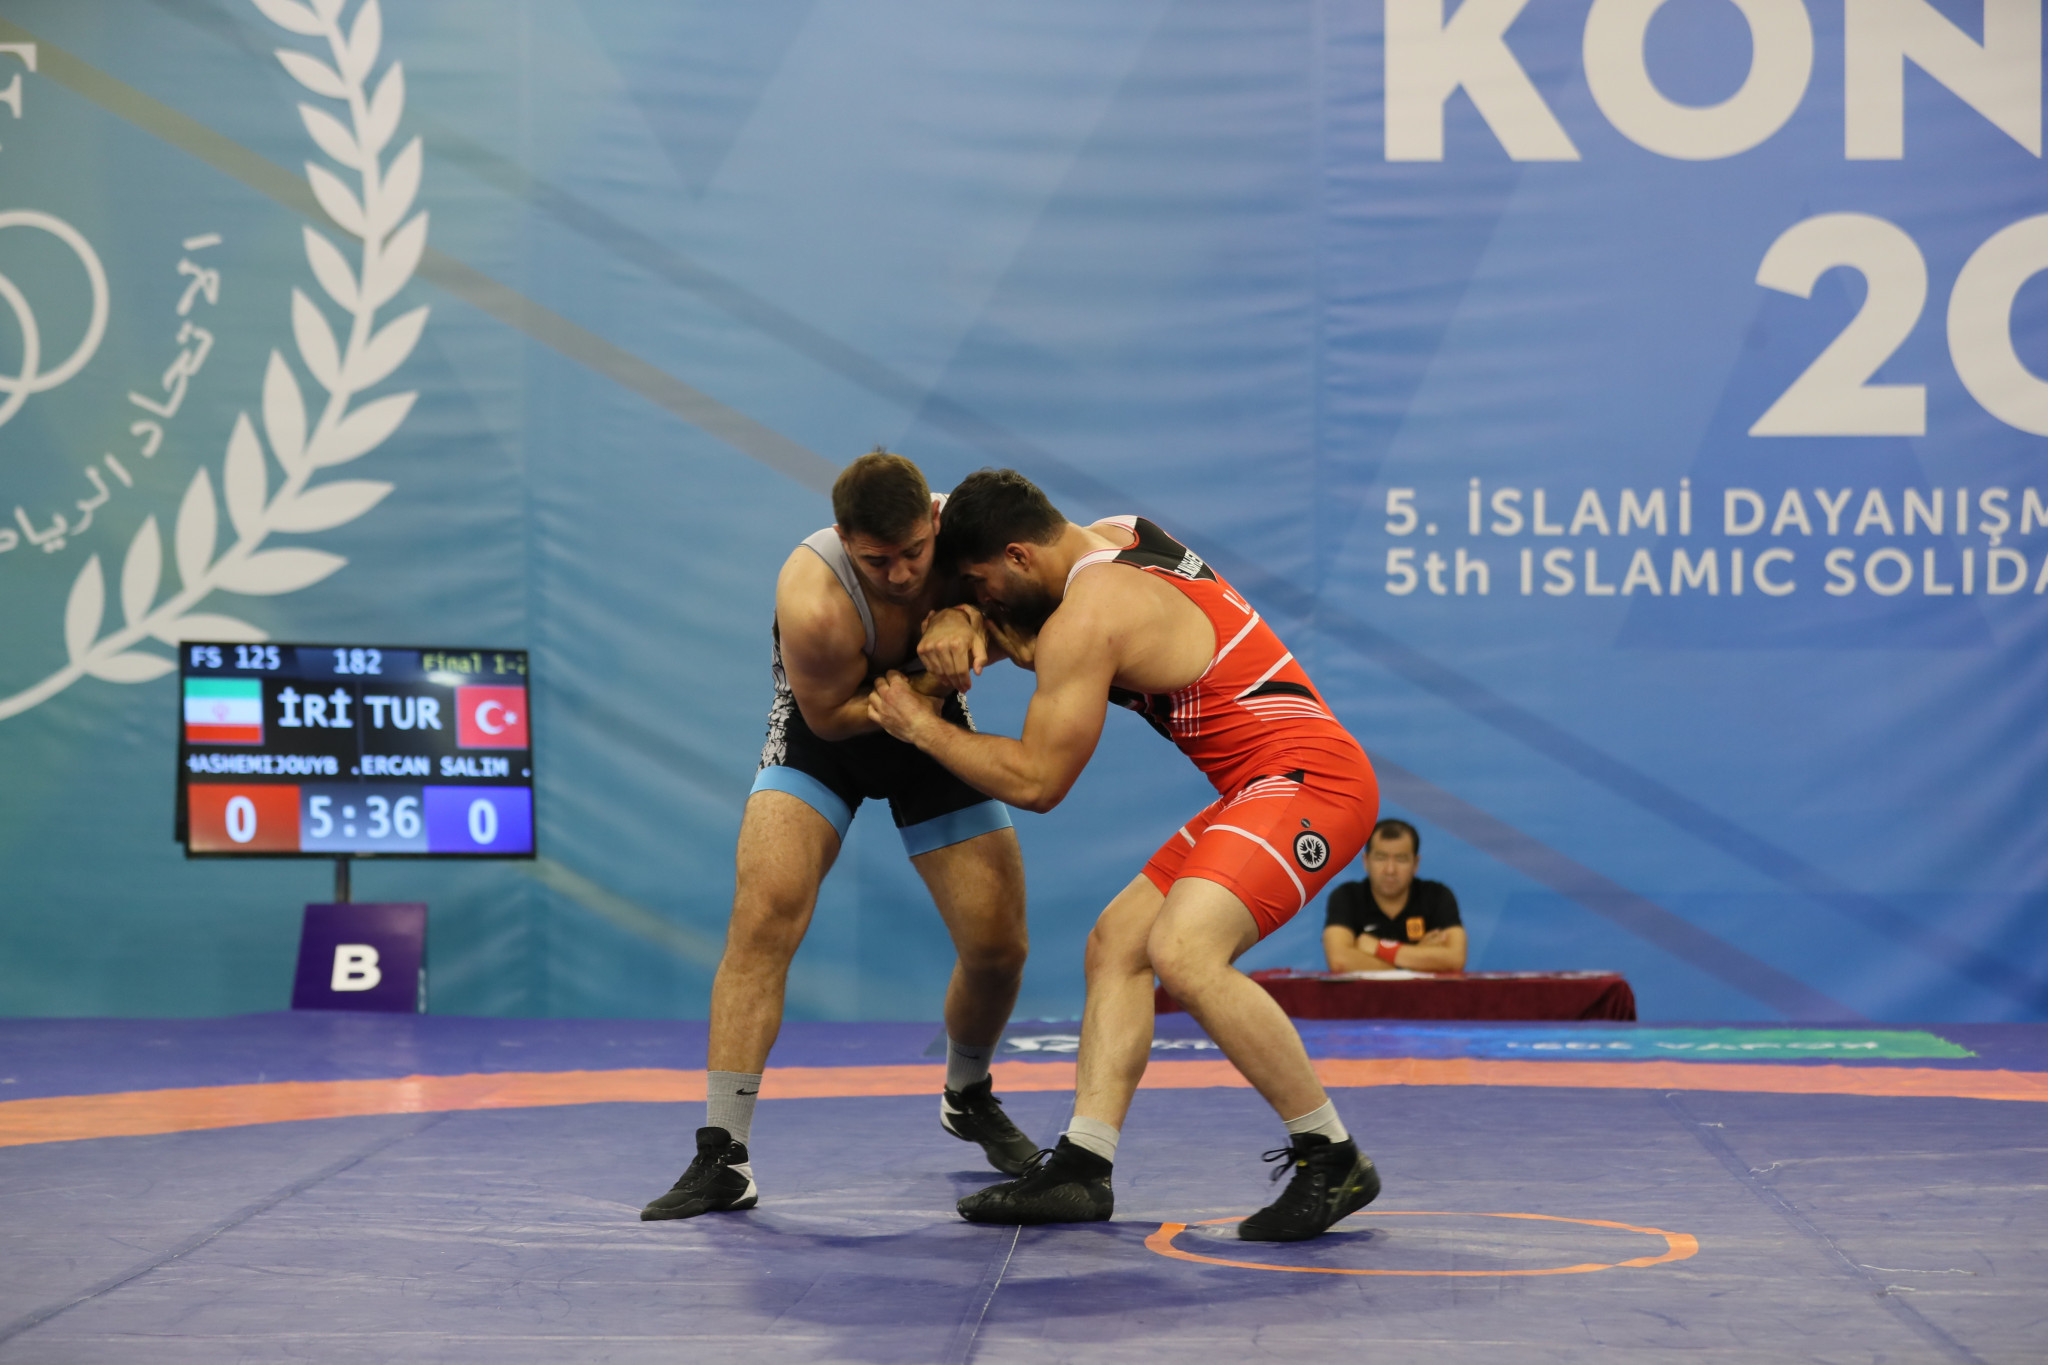 Seyedmehdi Seyedabasli Hashemijouybari defeated Turkey’s Salim Ercan in the men’s under-125kg final ©Konya 2021